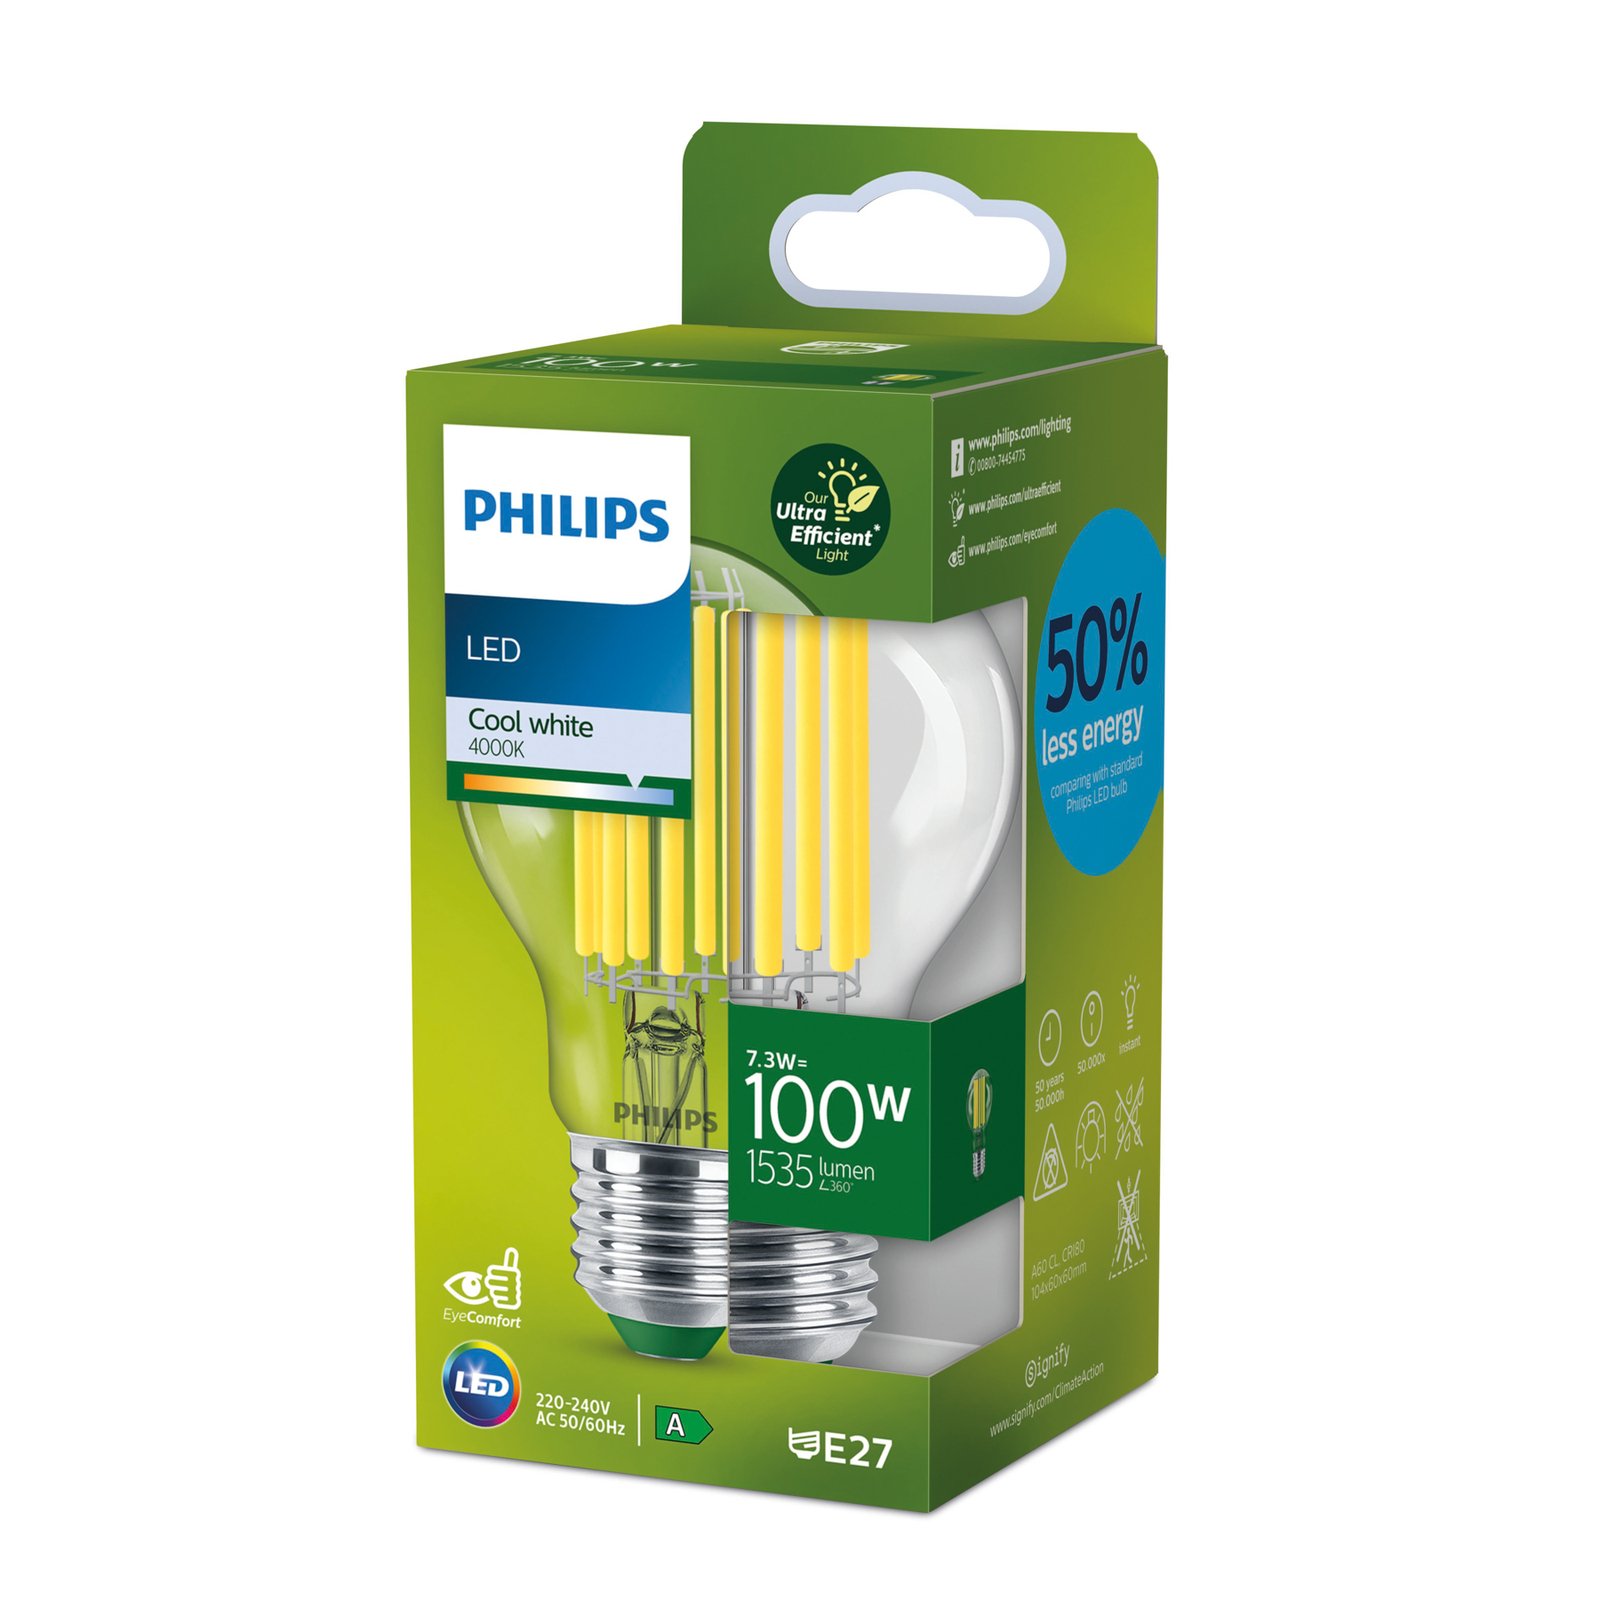 Philips E27 LED-lampa A60 7,3W 1535lm 4 000K klar